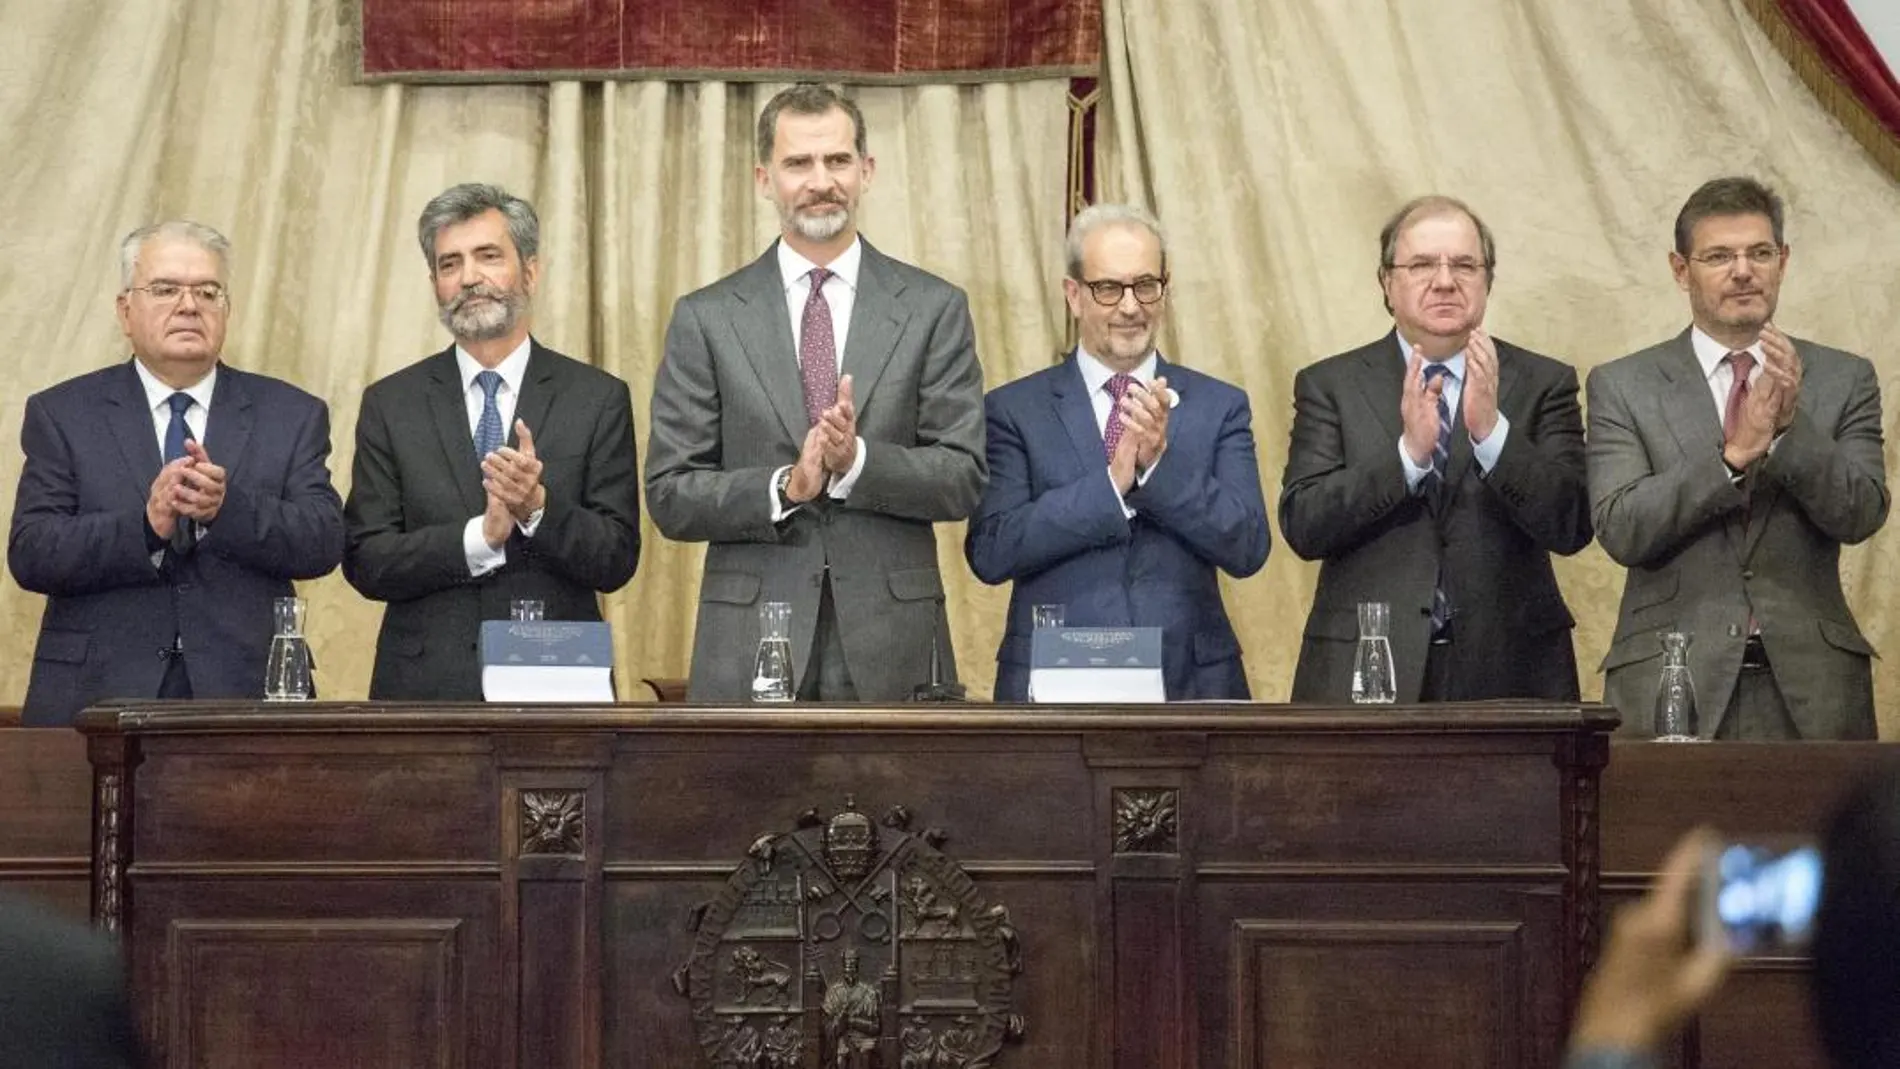 José González Rivas, Carlos Lesmes, Felipe VI, Daniel Hernández Ruipérez, Juan Vicente Herrera y Rafael Catalá